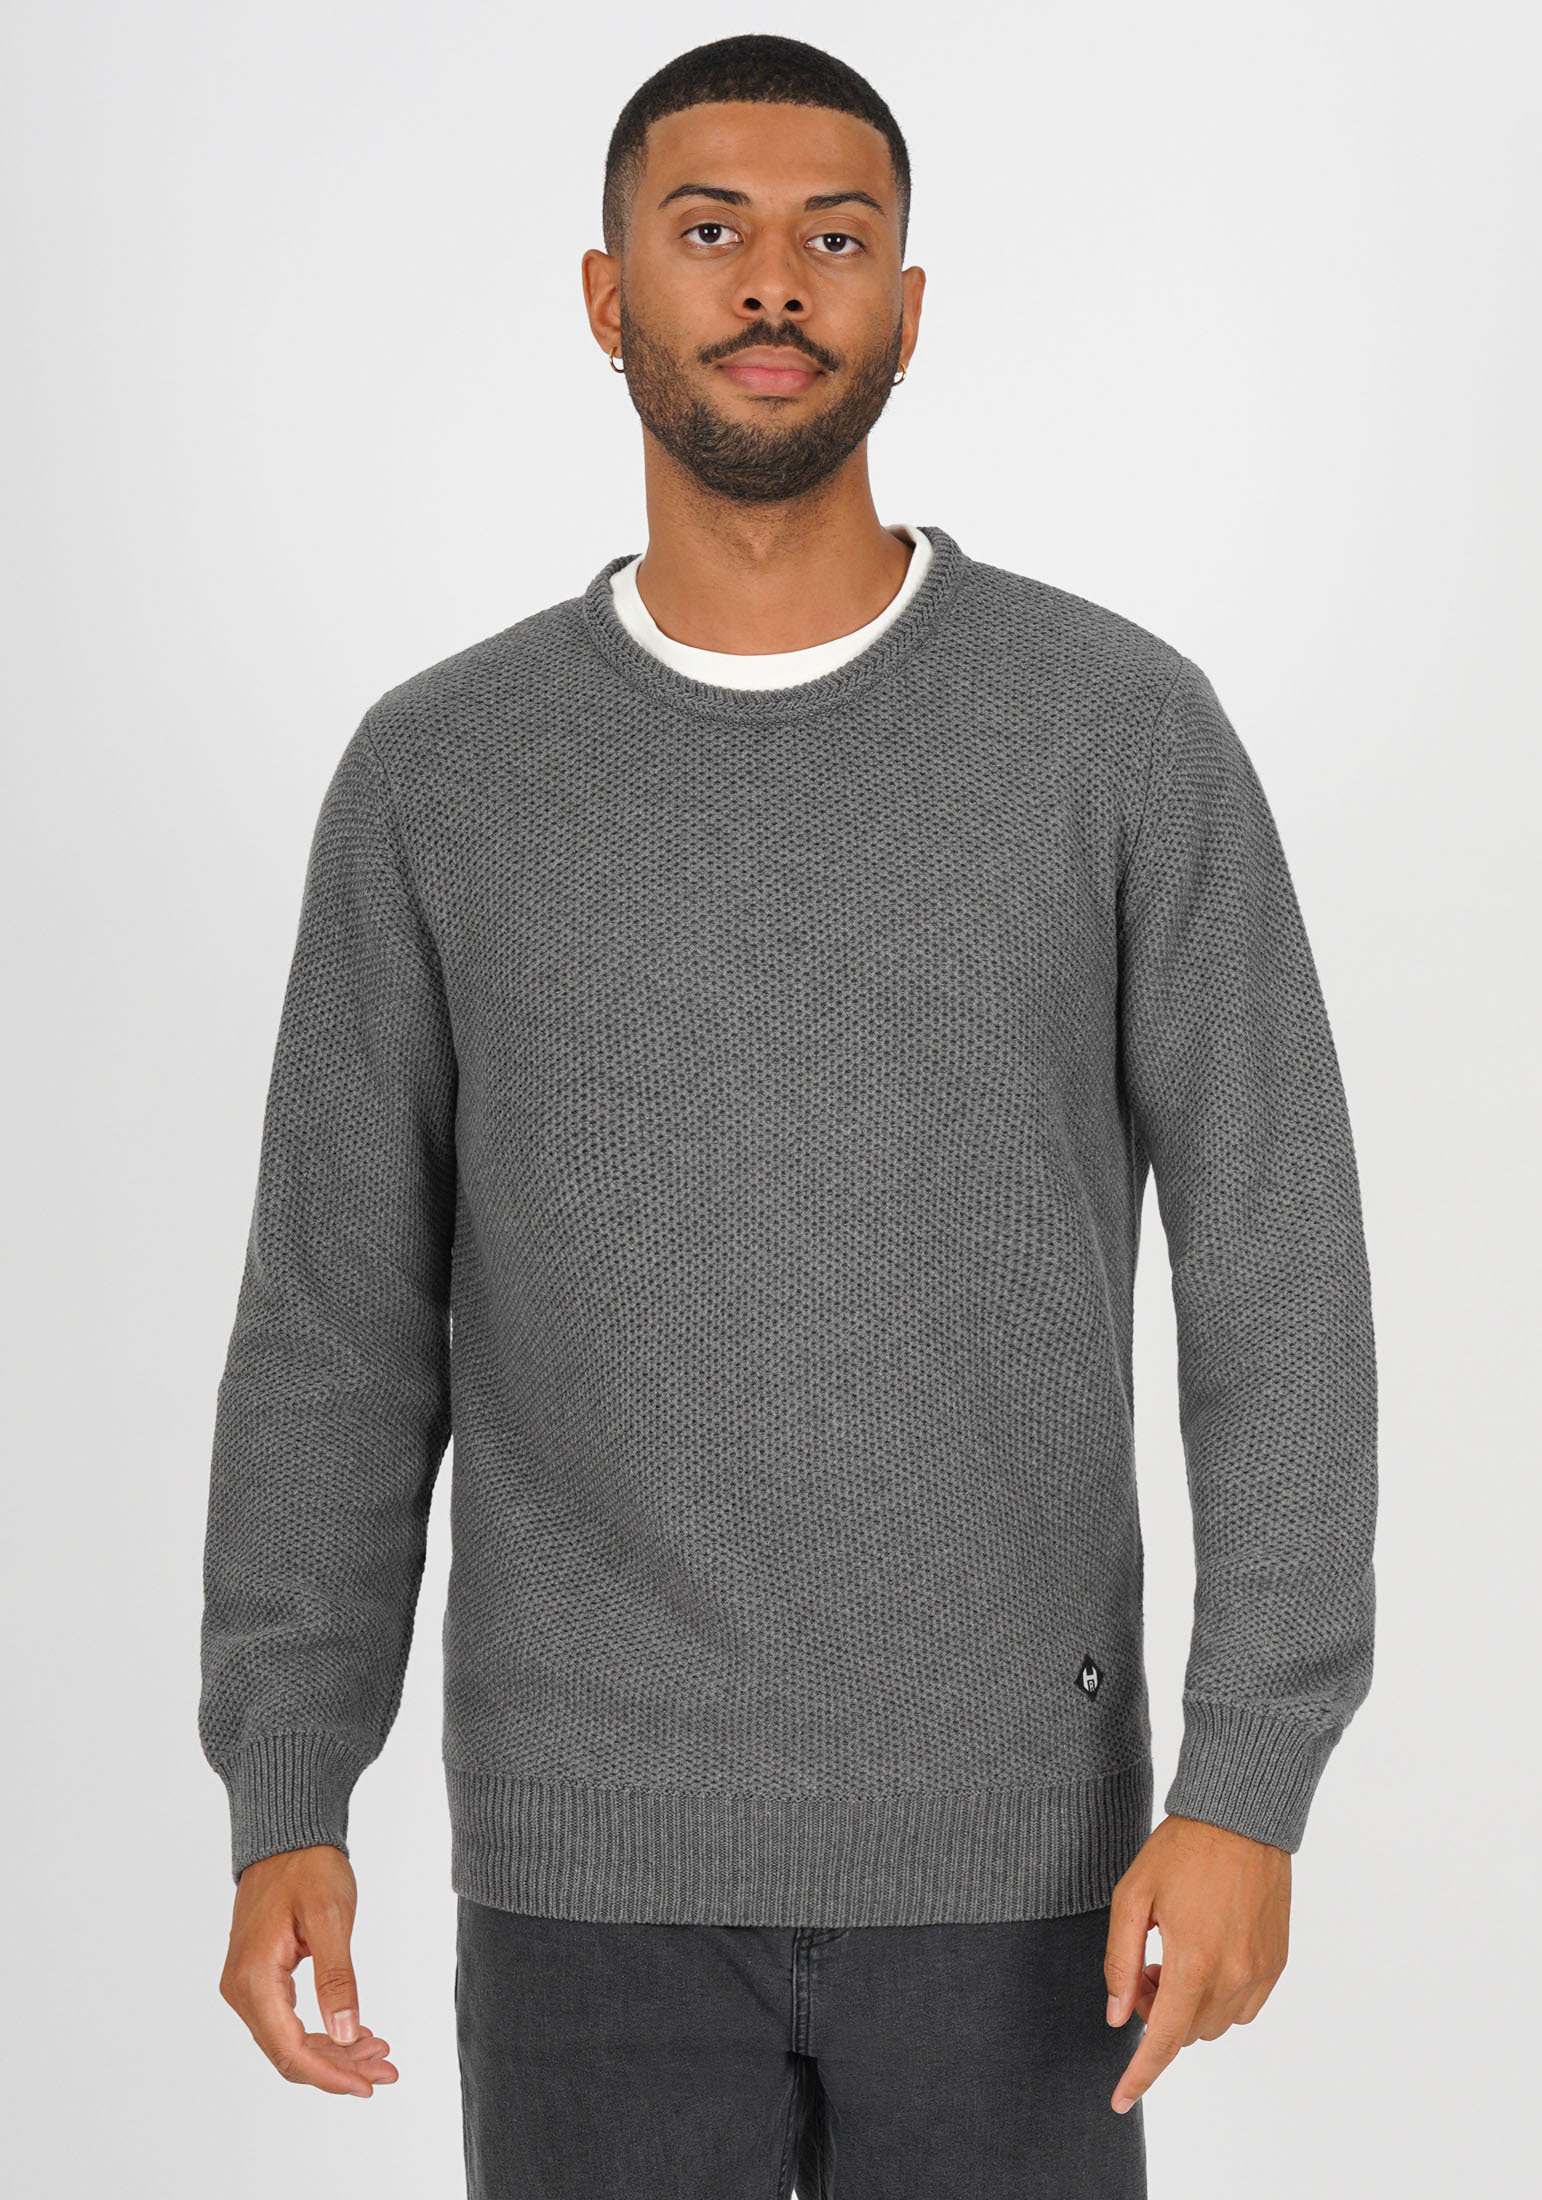 пуловер honesty rules strick jacquard цвет multi colors Пуловер HONESTY RULES Grid, серый